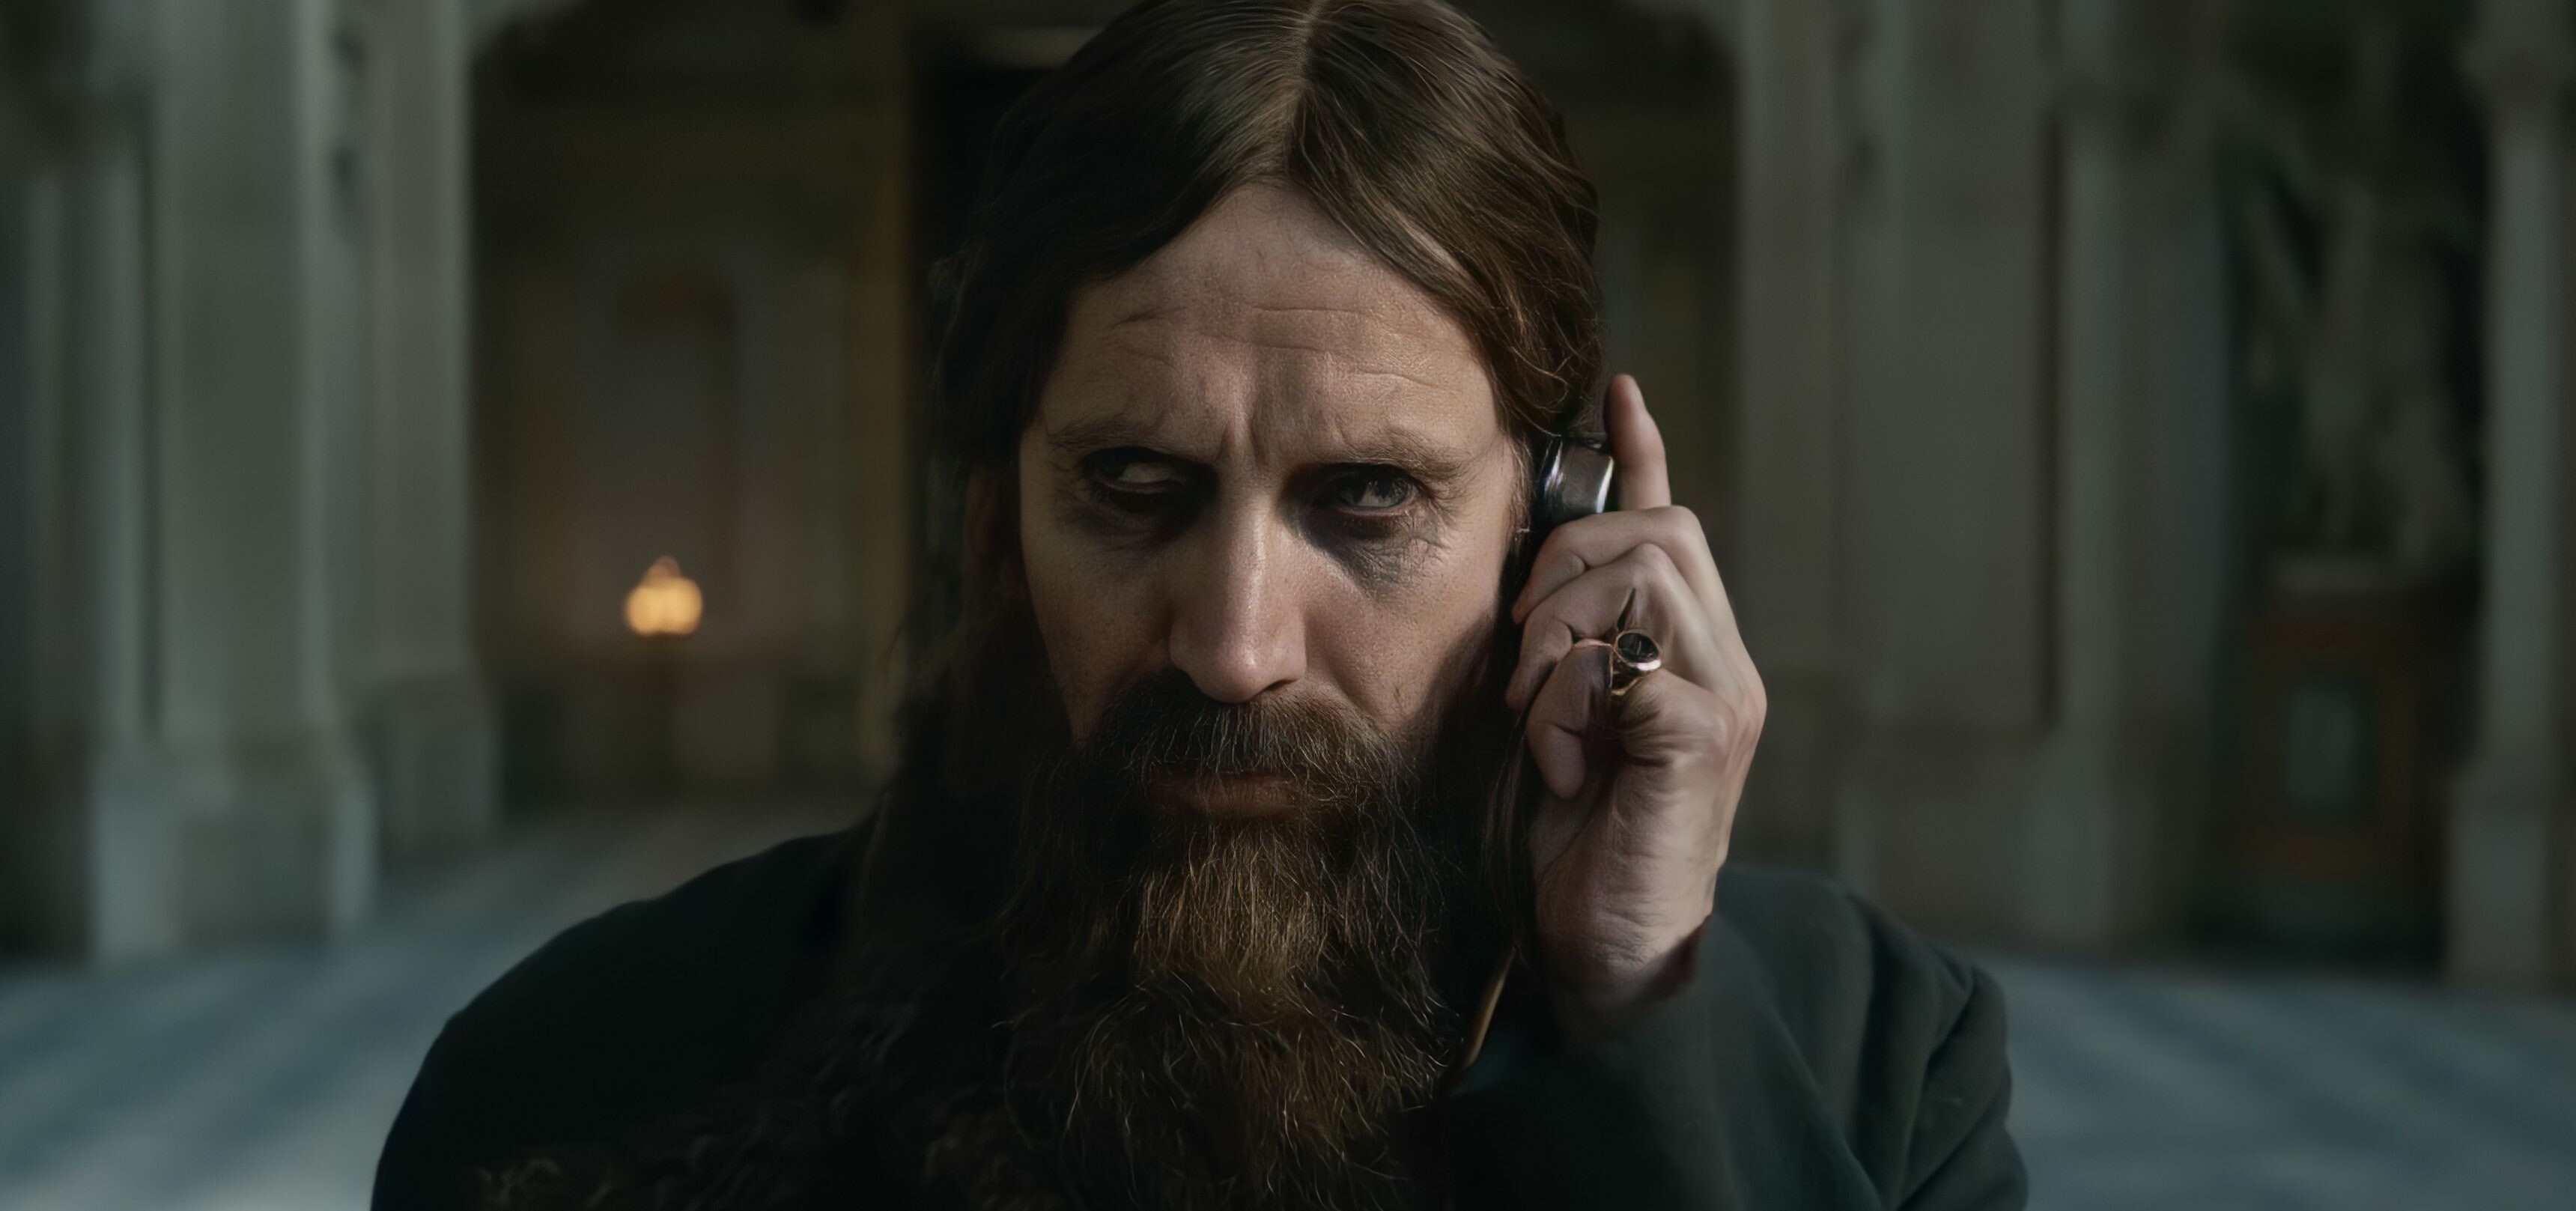 The King's Man: Rhys Ifans as Grigori Rasputin, the Tsar's personal physician. 3440x1620 Dual Screen Wallpaper.